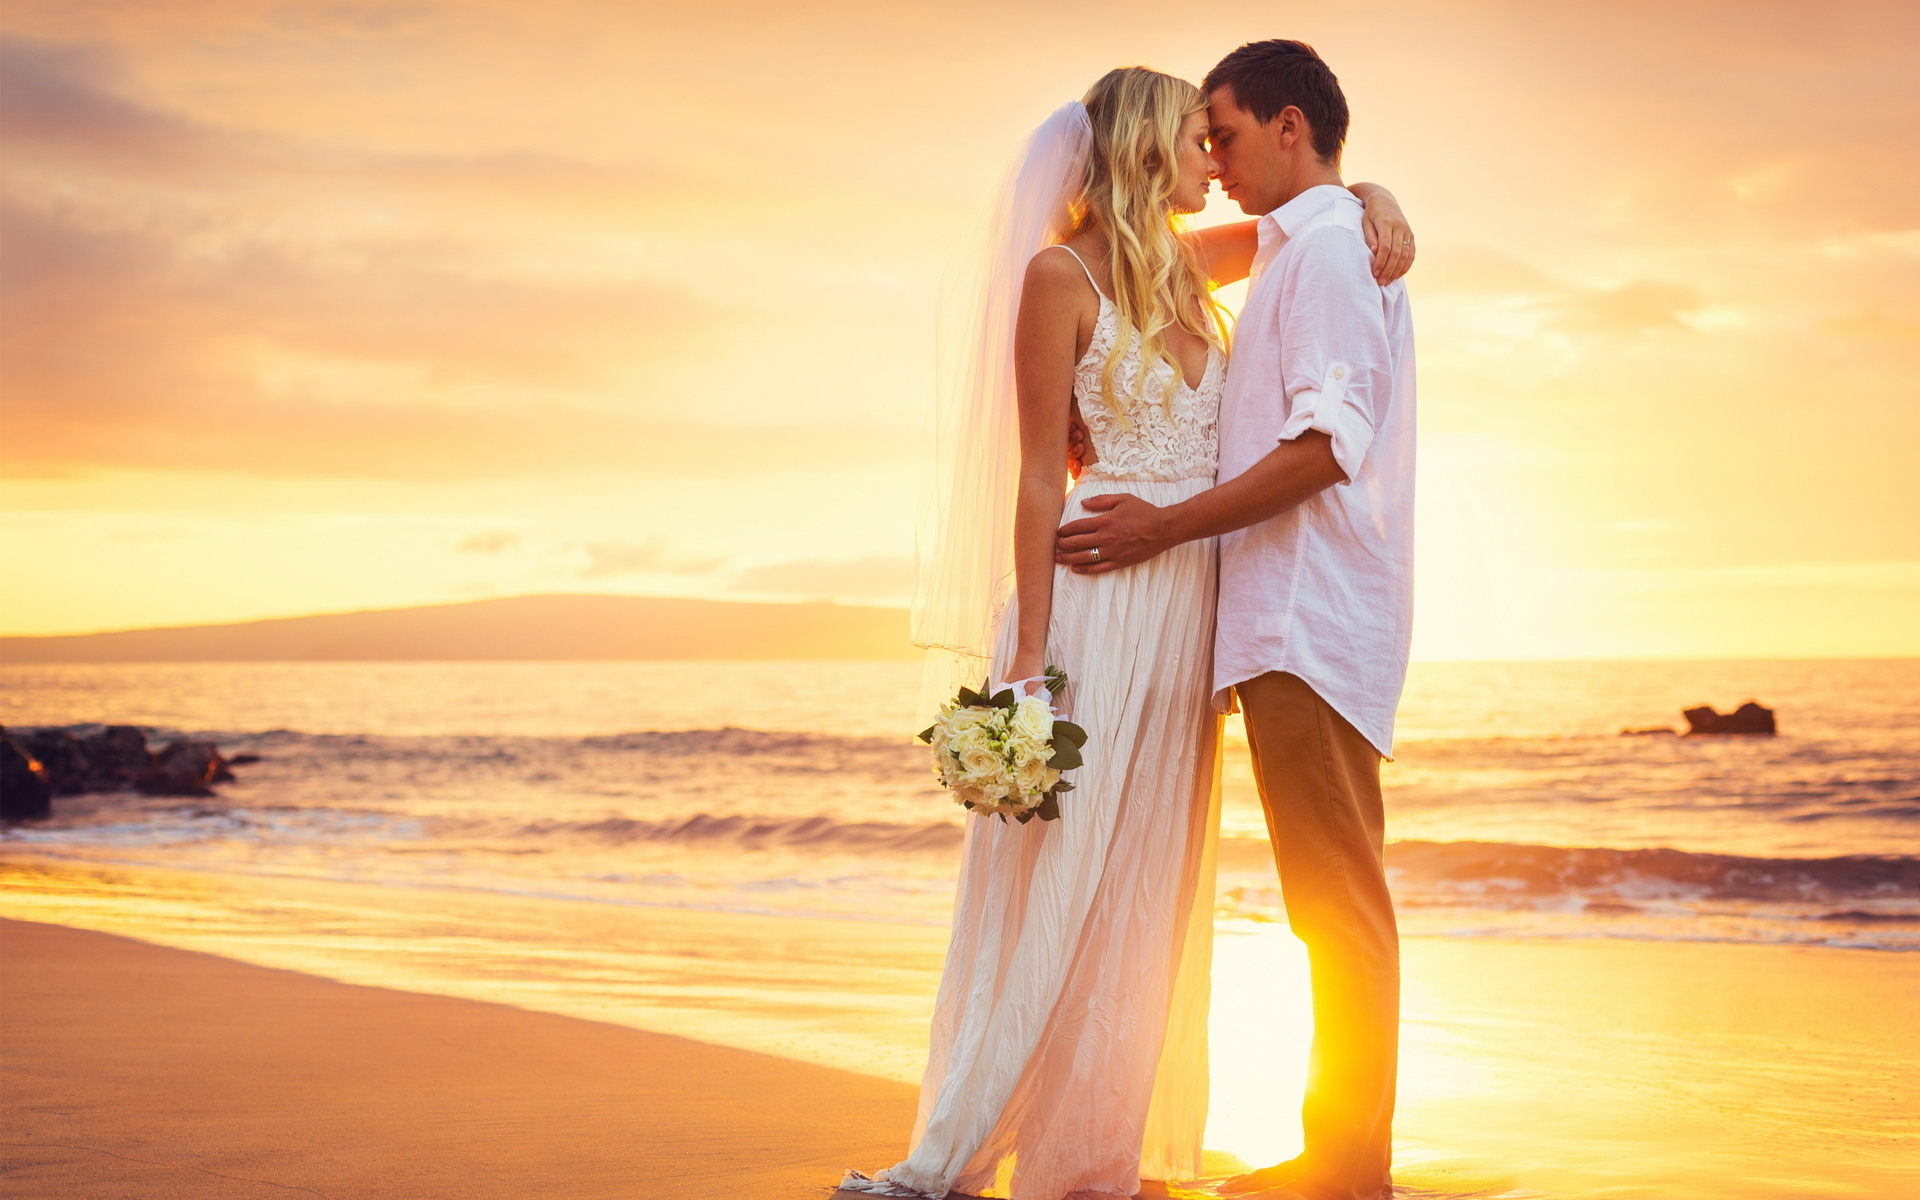 Free HD love, wedding, couple, photography, bride, groom, romantic, wedding dress